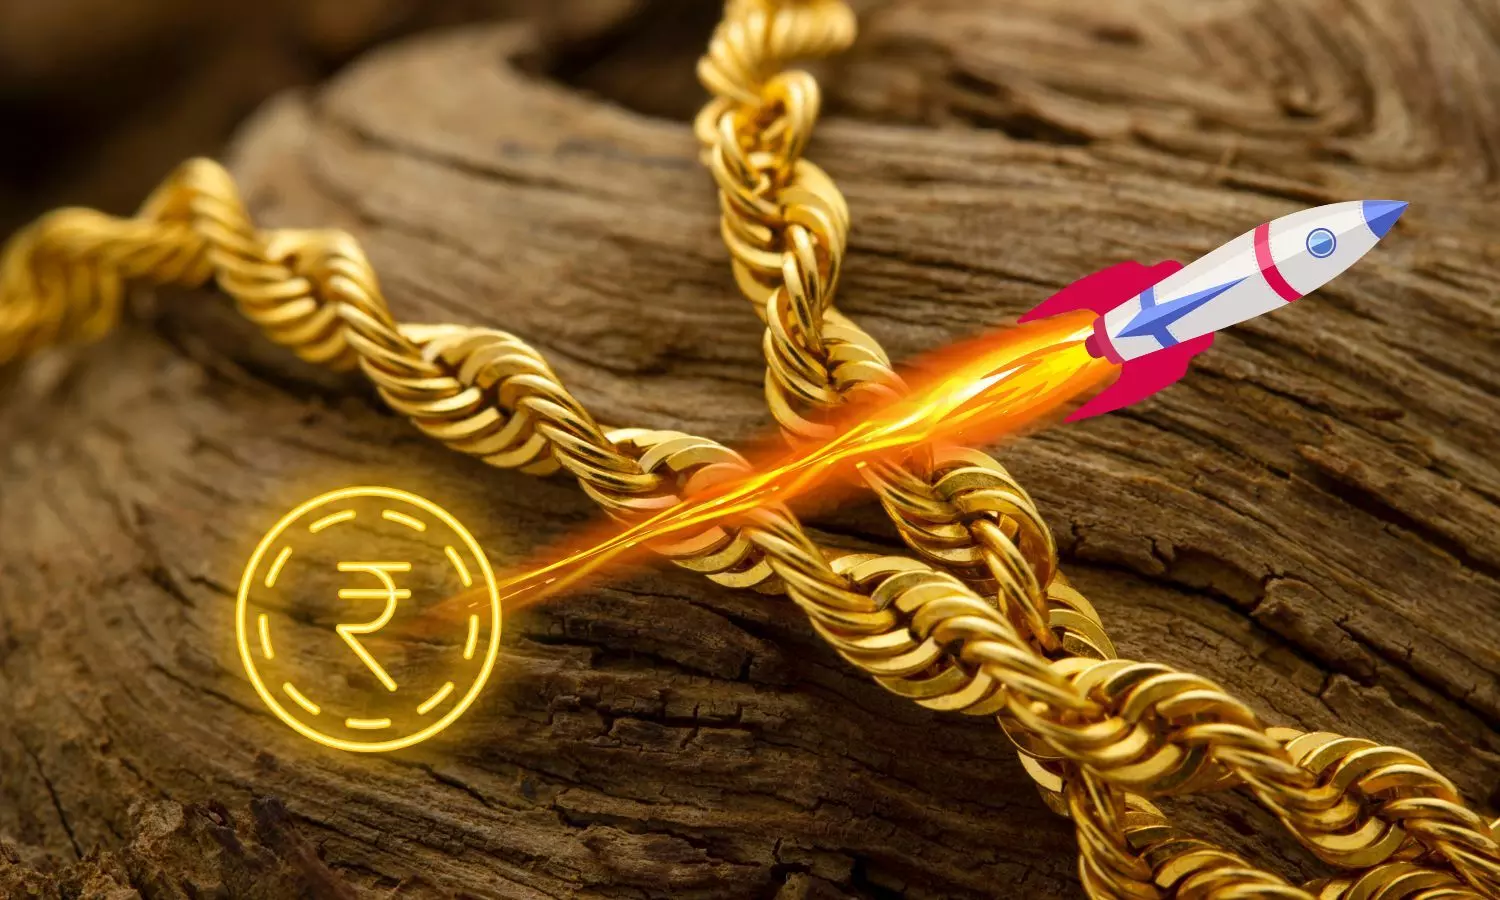 Gold chain, Rupee, Rocket